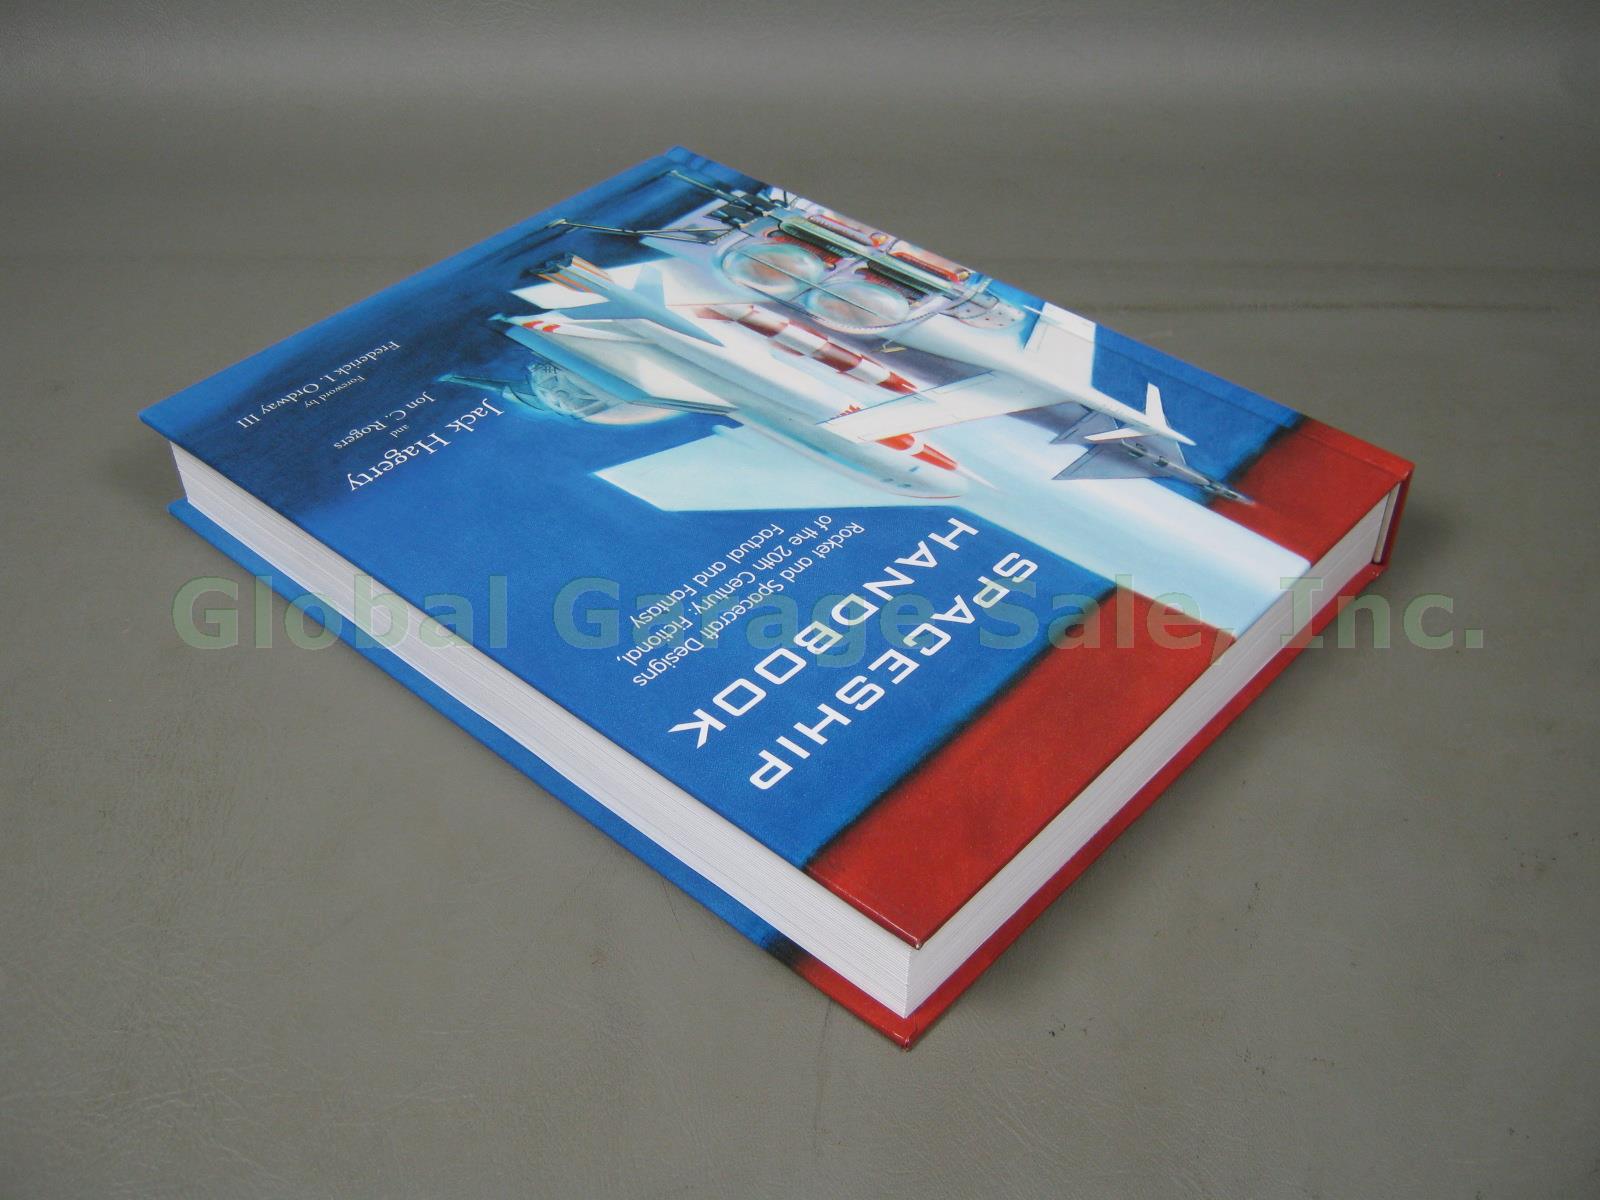 Spaceship Handbook Rocket Spacecraft Designs 20th Century Jack Hagerty Rogers NR 1